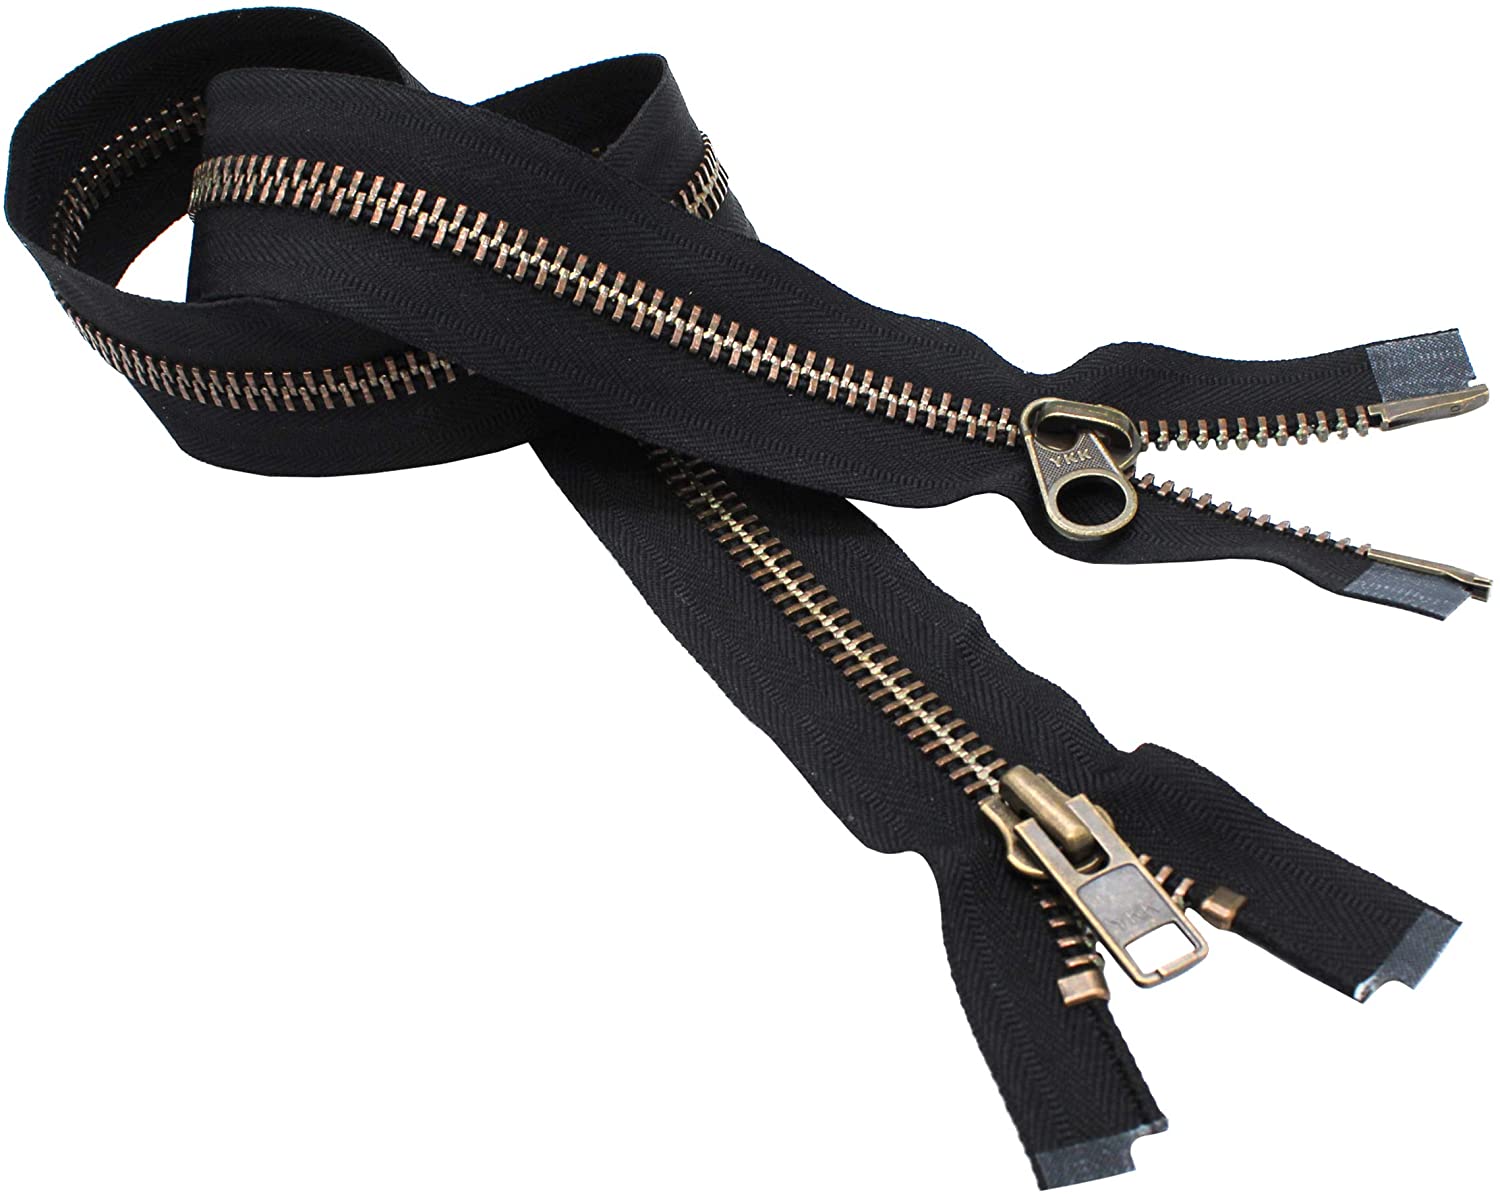 YKK #10 Antique Brass Metal Separating Zippers Extra Heavy-duty